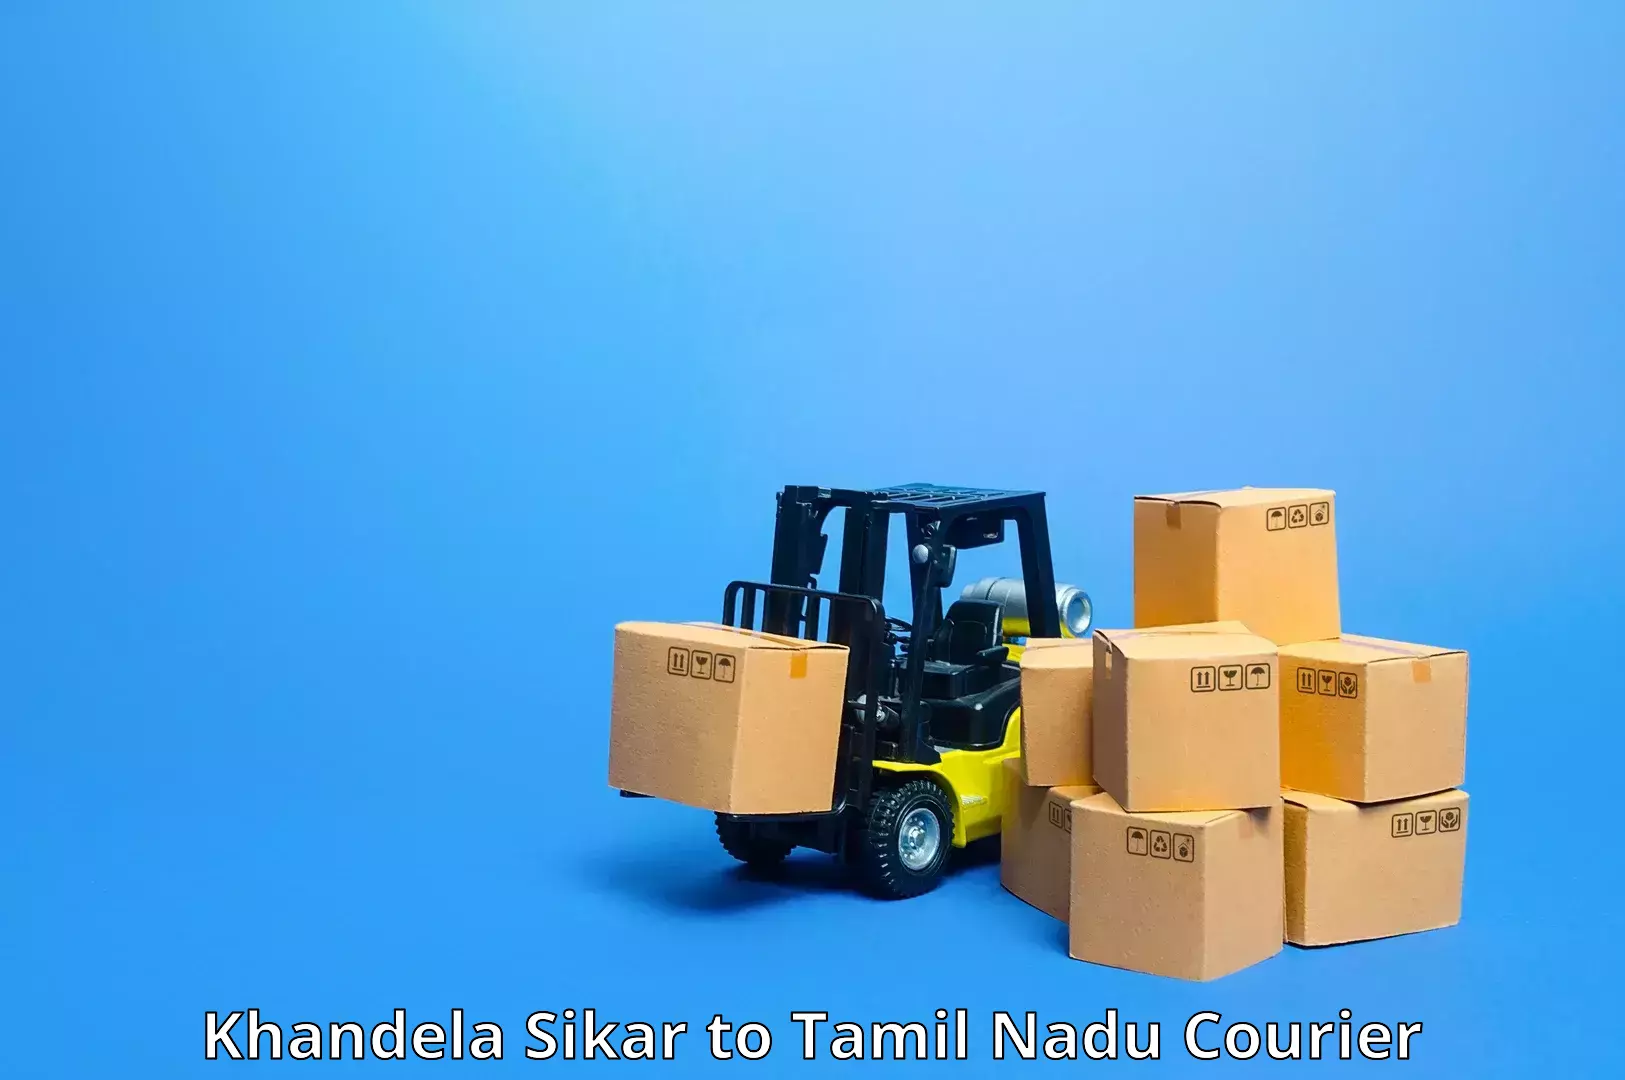 Express delivery capabilities Khandela Sikar to Chennai Port